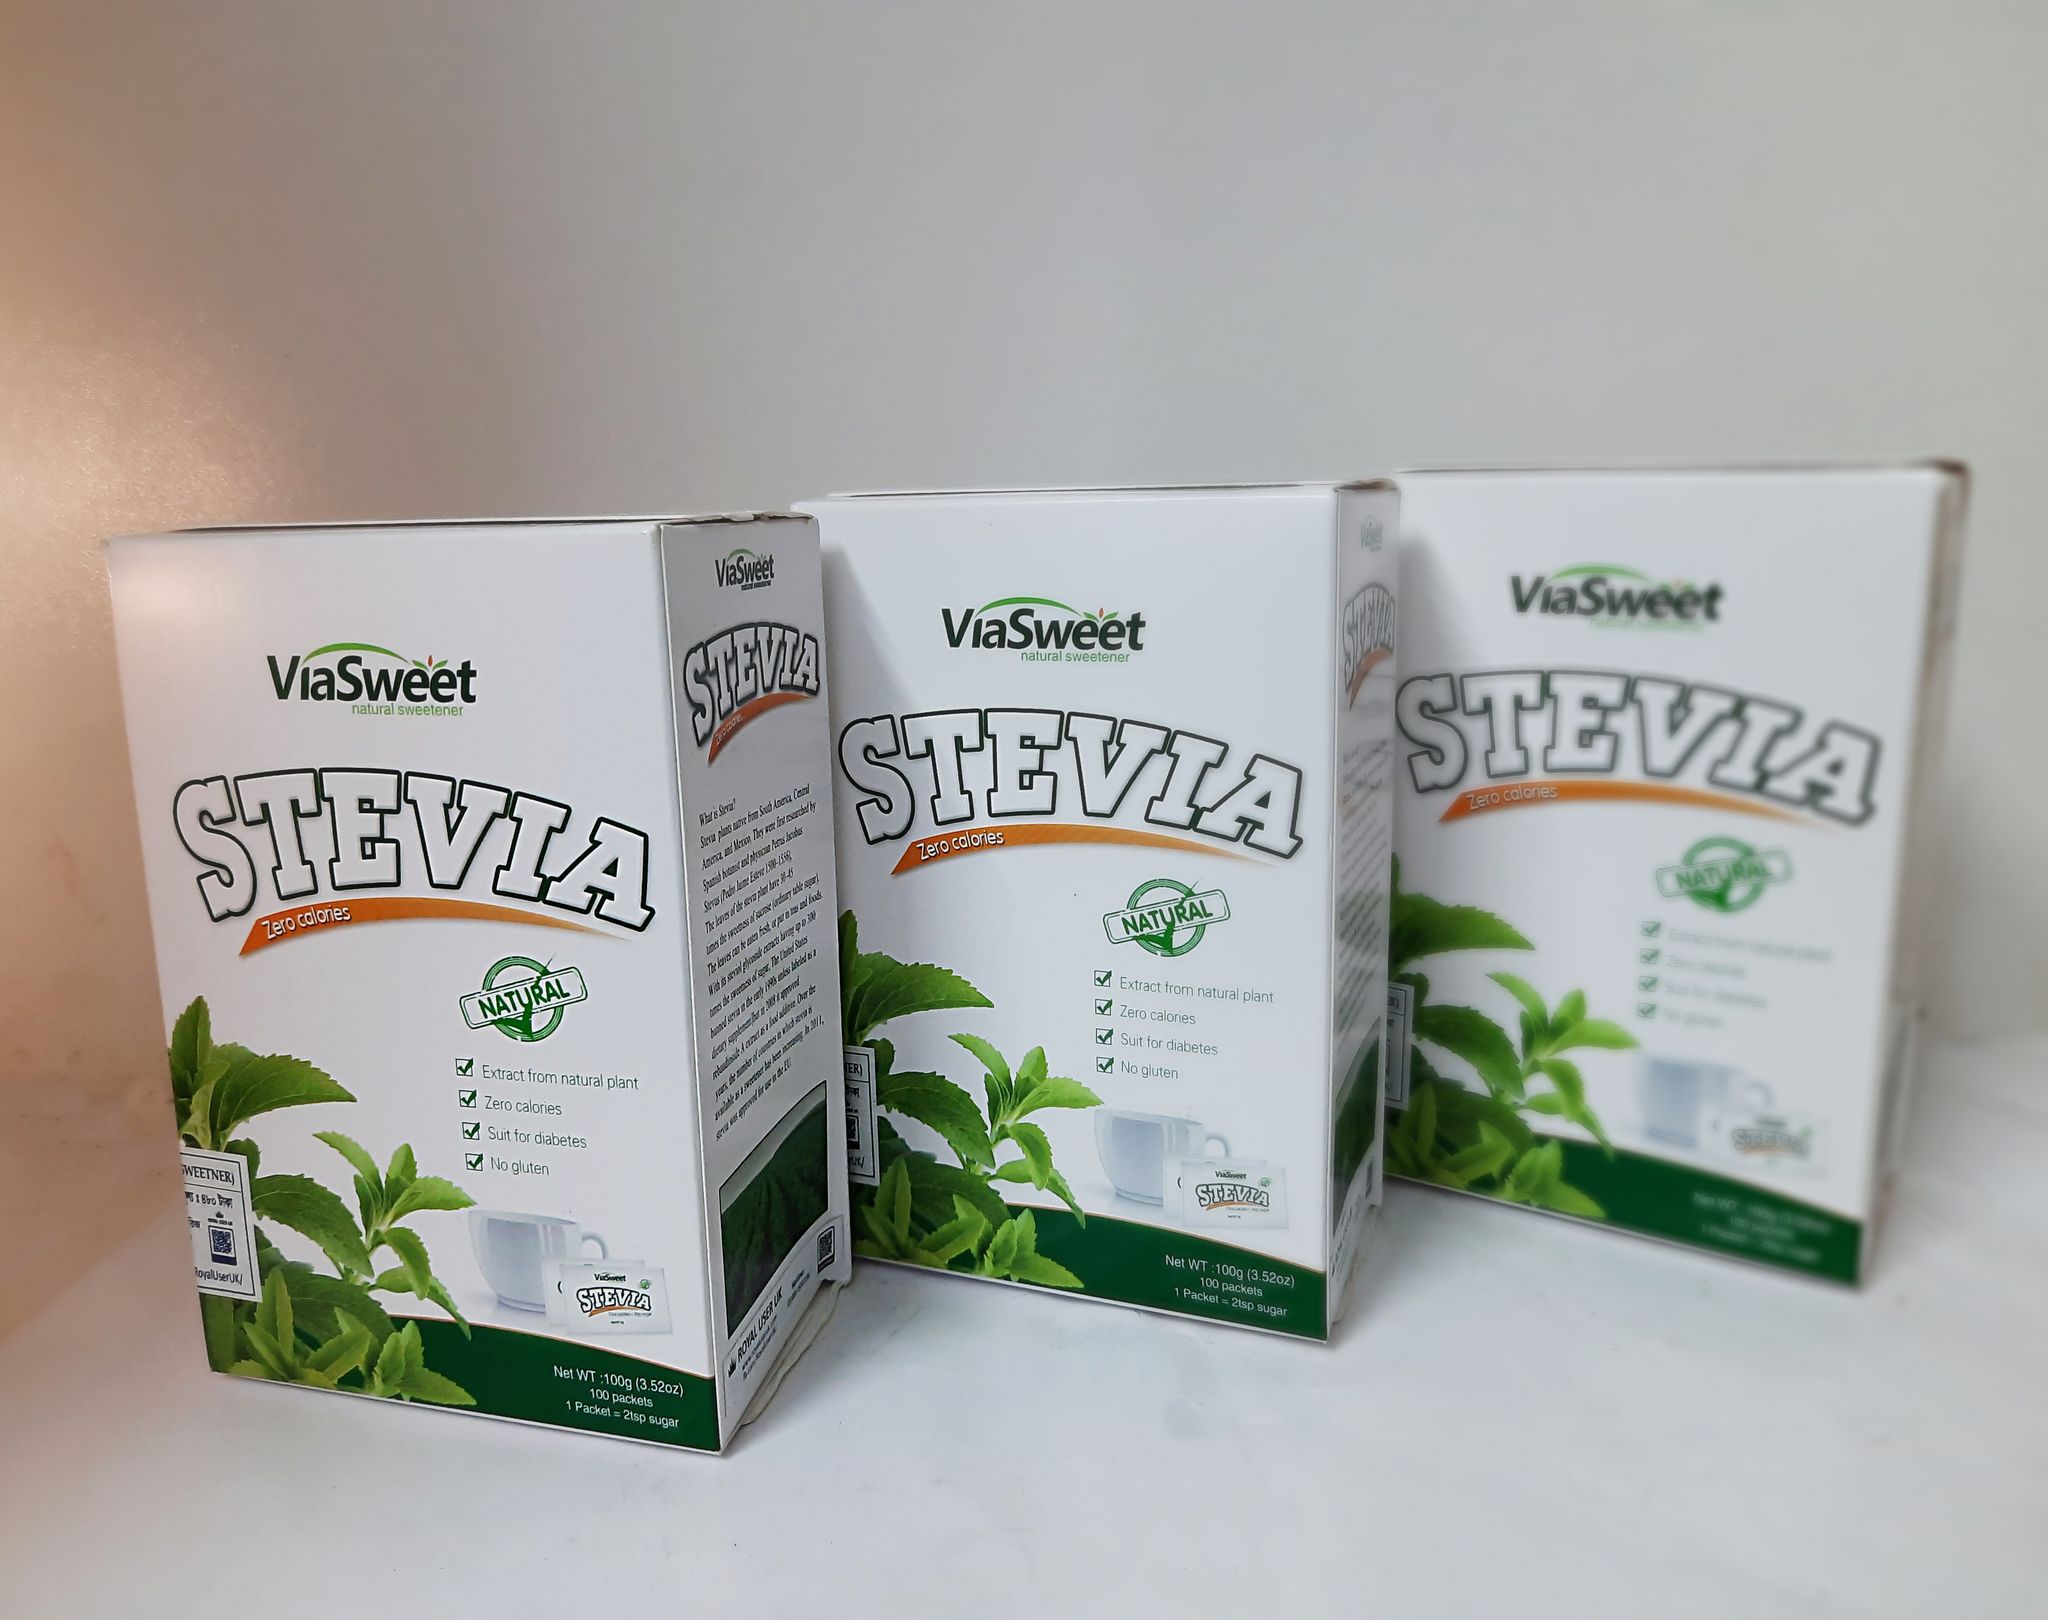 Stevia Extract Box - 100 Mini Packet, স্টেভিয়া এক্সট্র্যাক্ট বক্স